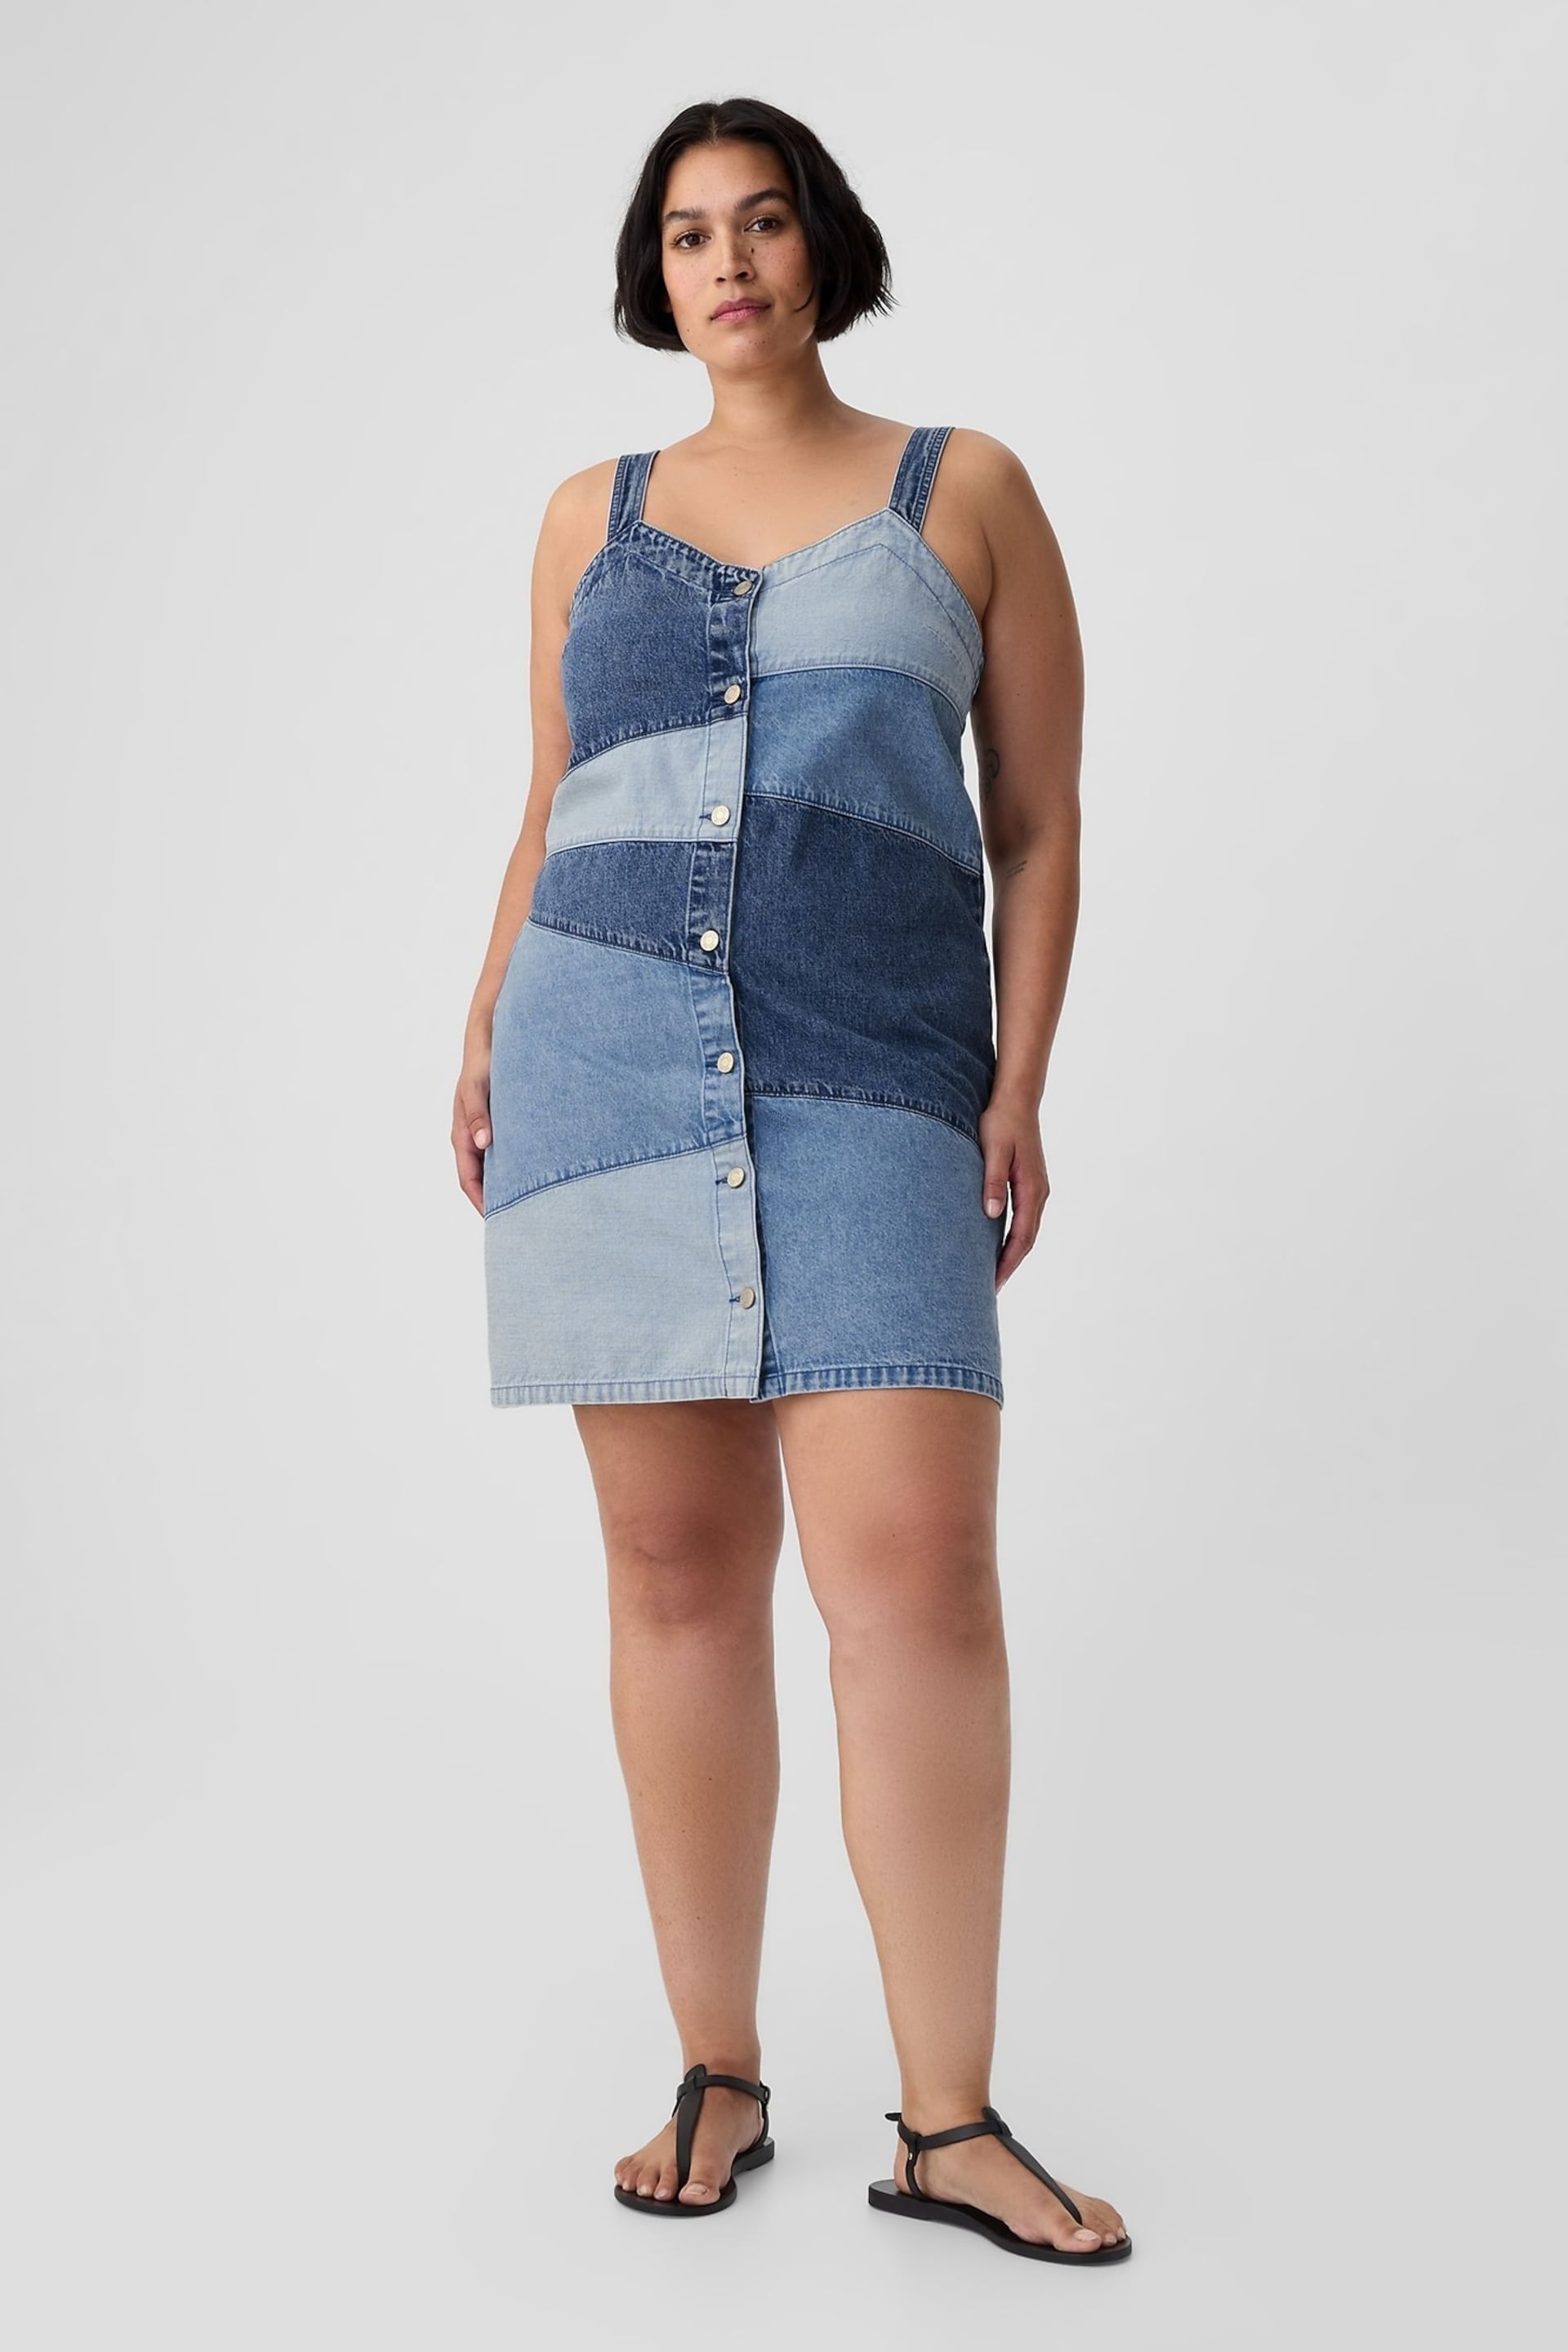 Gap Blue Patchwork Denim Mini Dress - Image 2 of 6